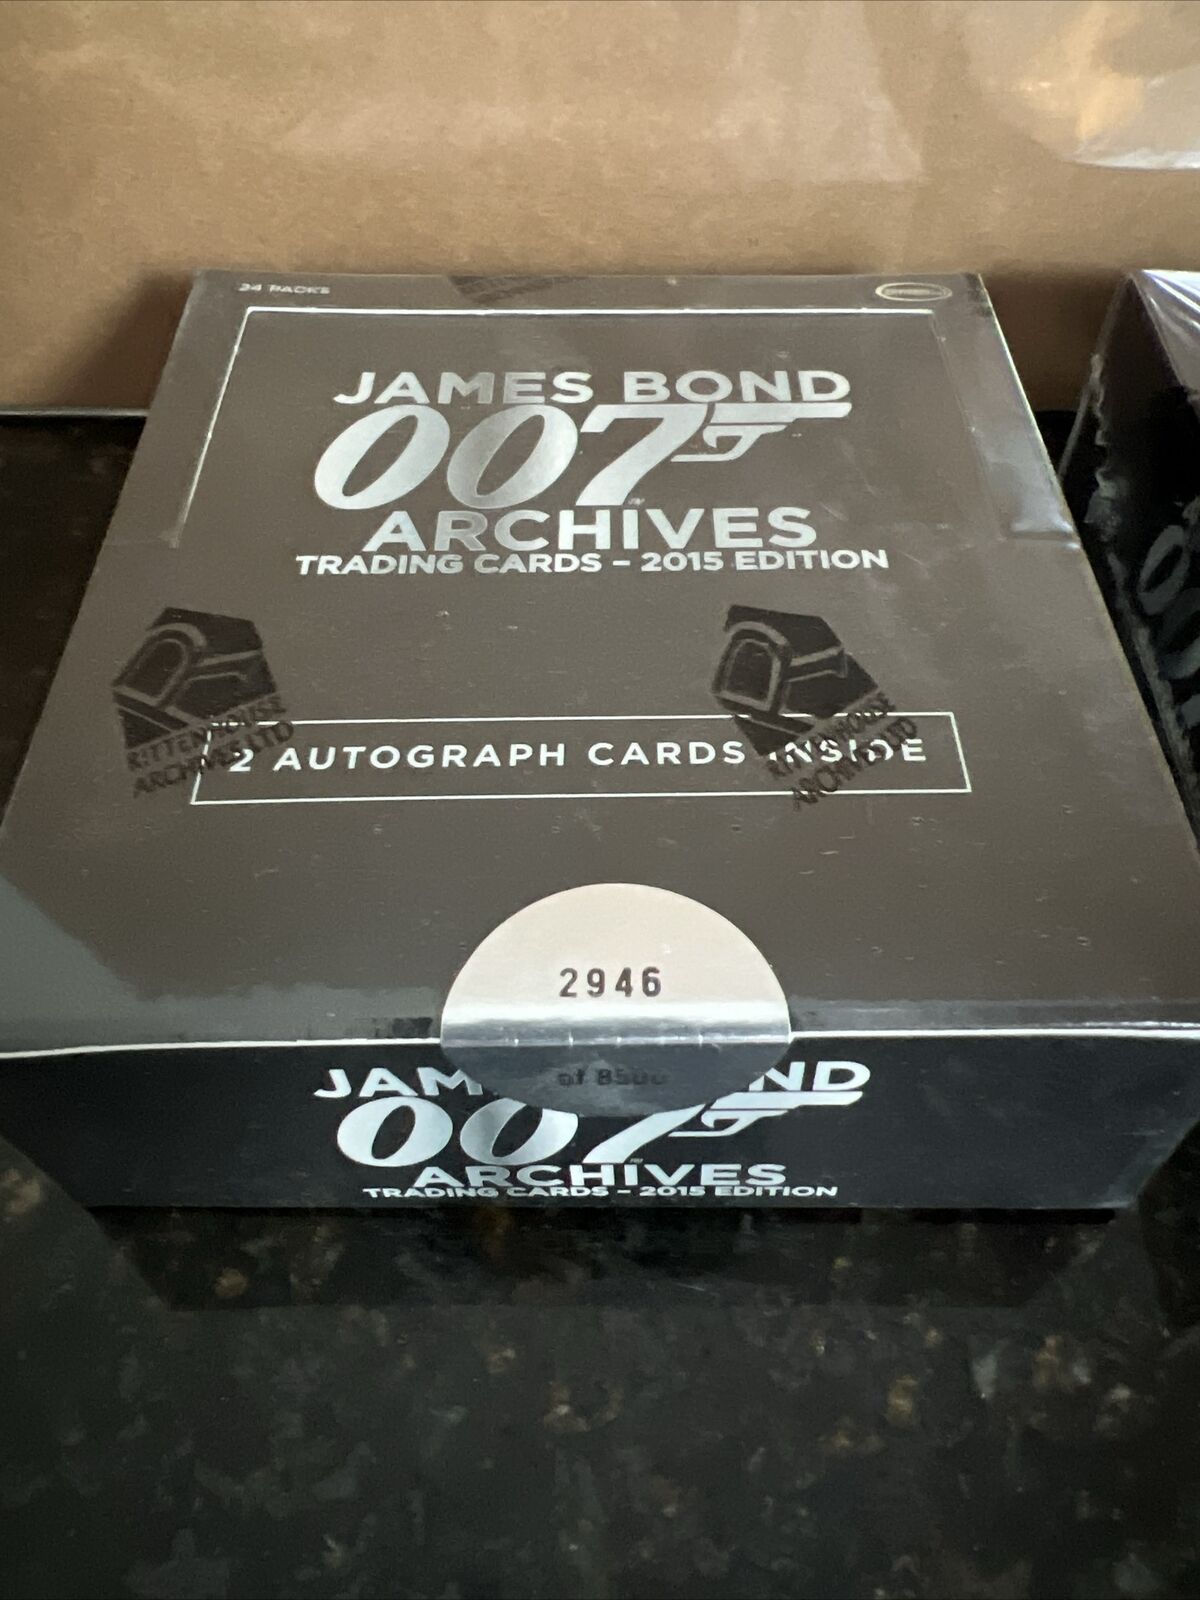 2015 James Bond Archives Edition sealed Box - 2 AUTOS